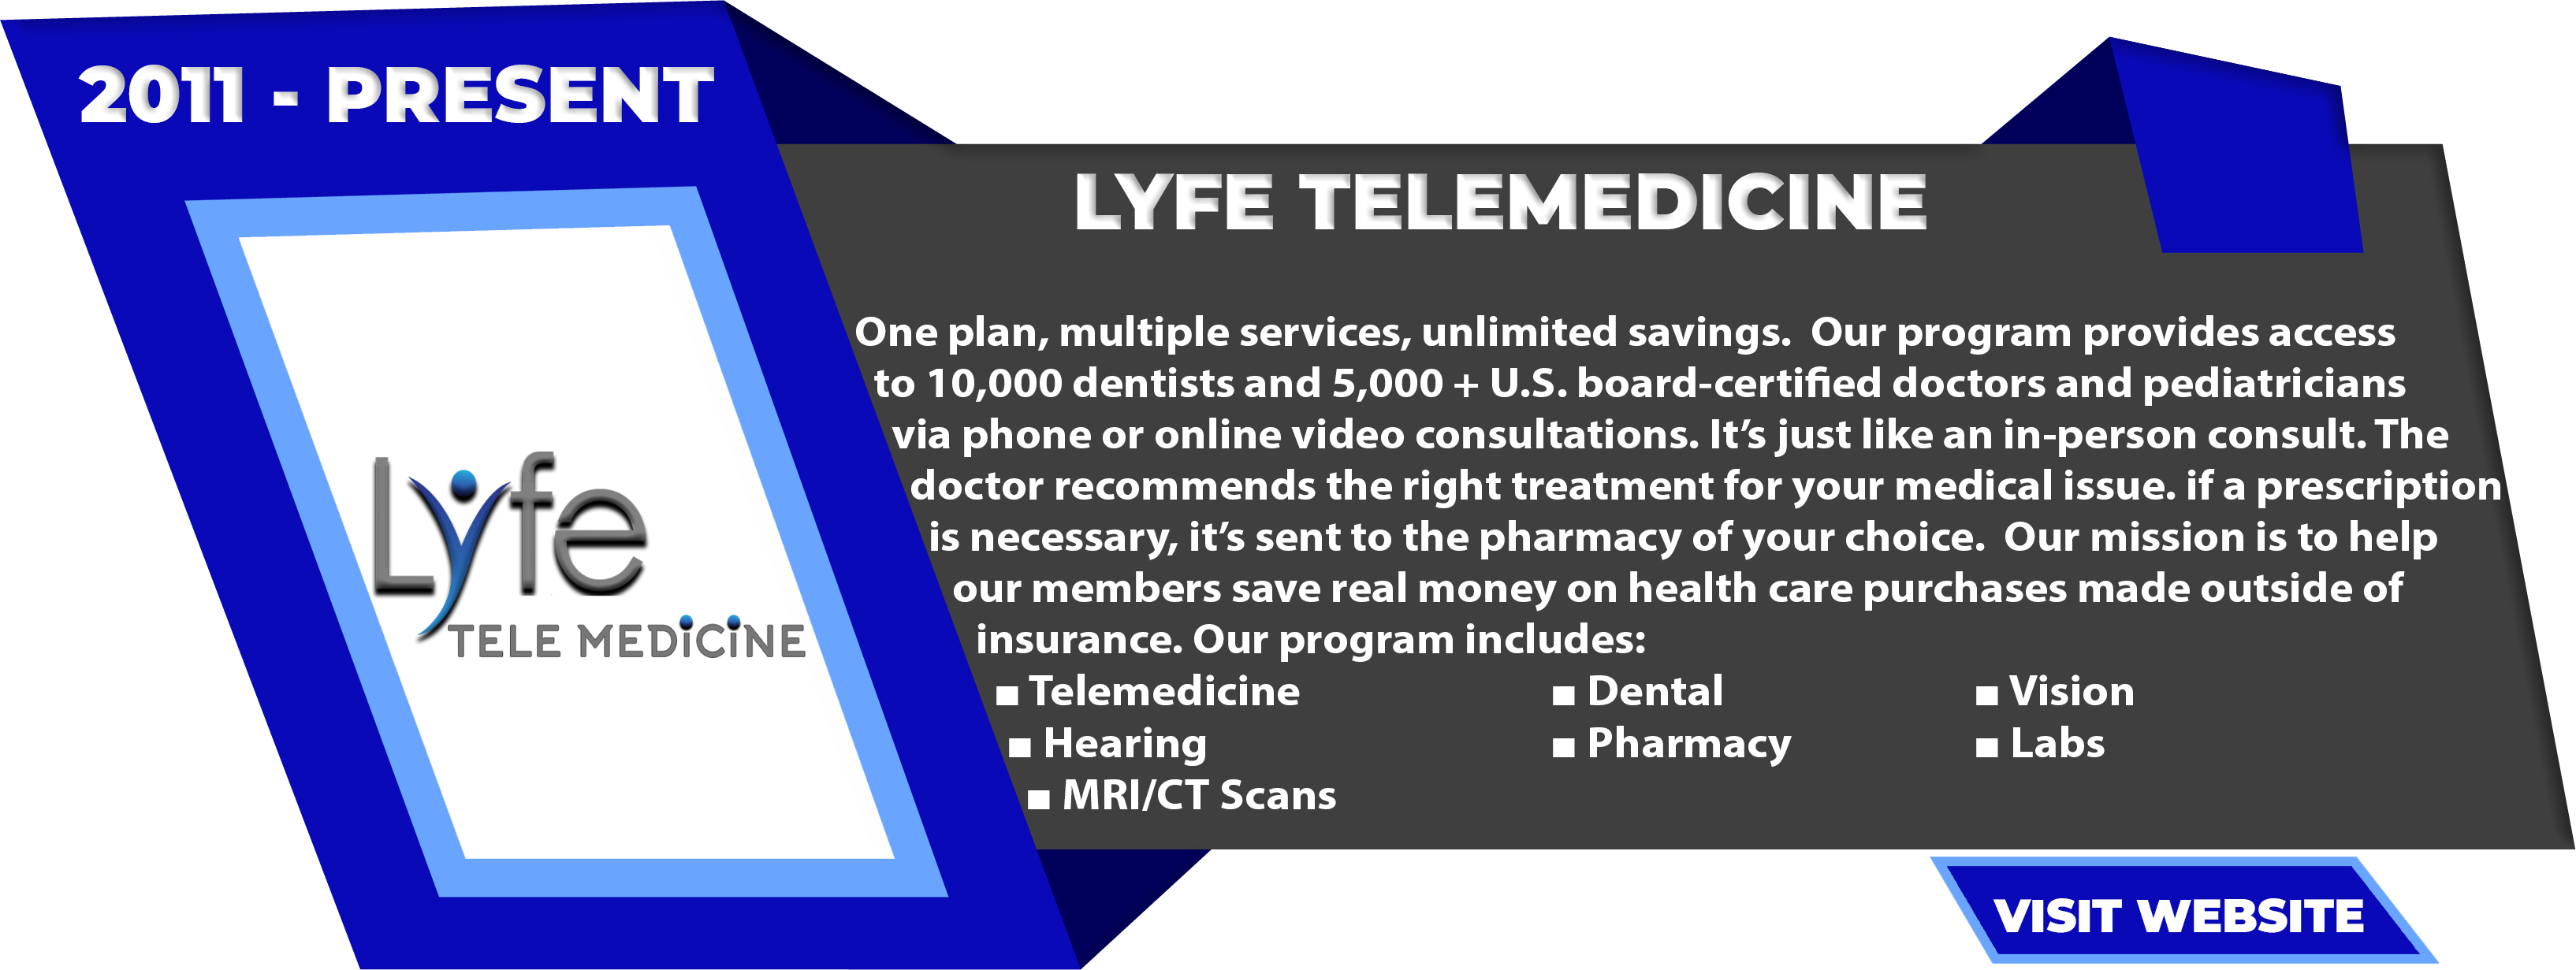 Lyfe-Telemedicine-2011-Present-1